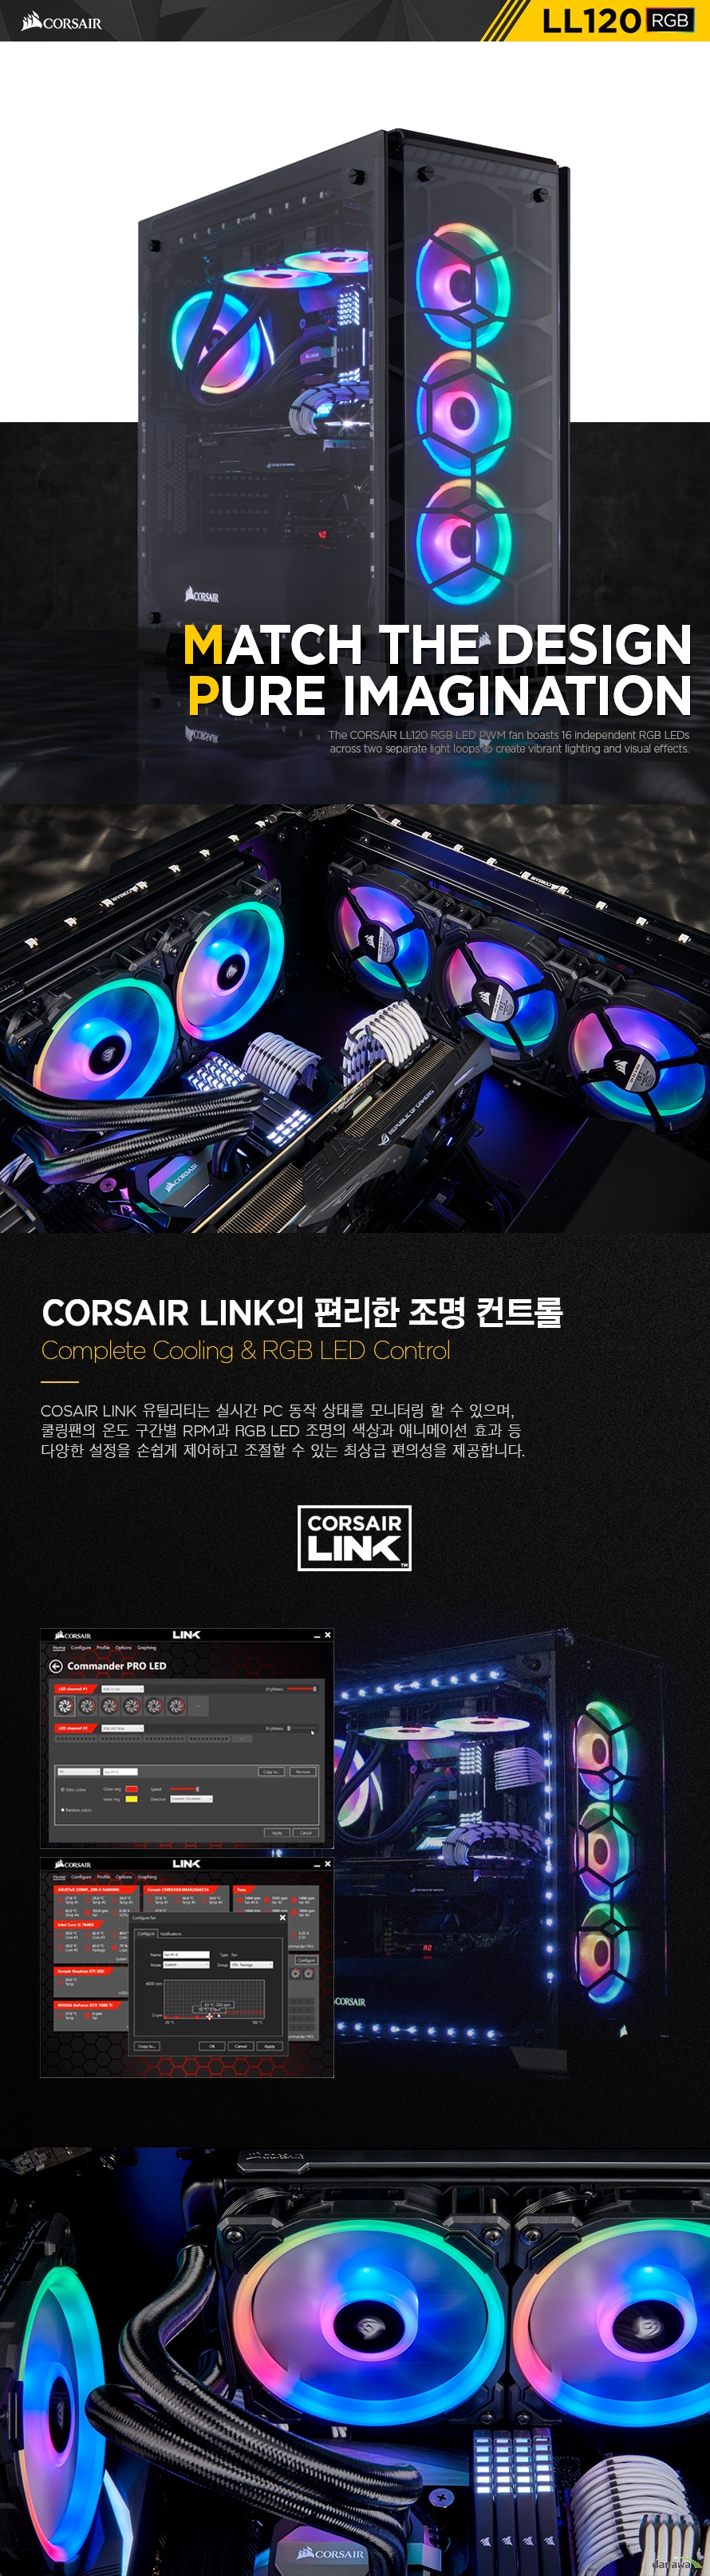 COSAIR LINK 유틸리티는 실시간 PC 동작 상태를 모니터링 할 수 있으며, 쿨링팬의 온도 구간별 RPM과 RGB LED 조명의 색상과 애니메이션 효과 등 다양한 설정을 손쉽게 제어하고 조절할 수 있는 최상급 편의성을 제공합니다.